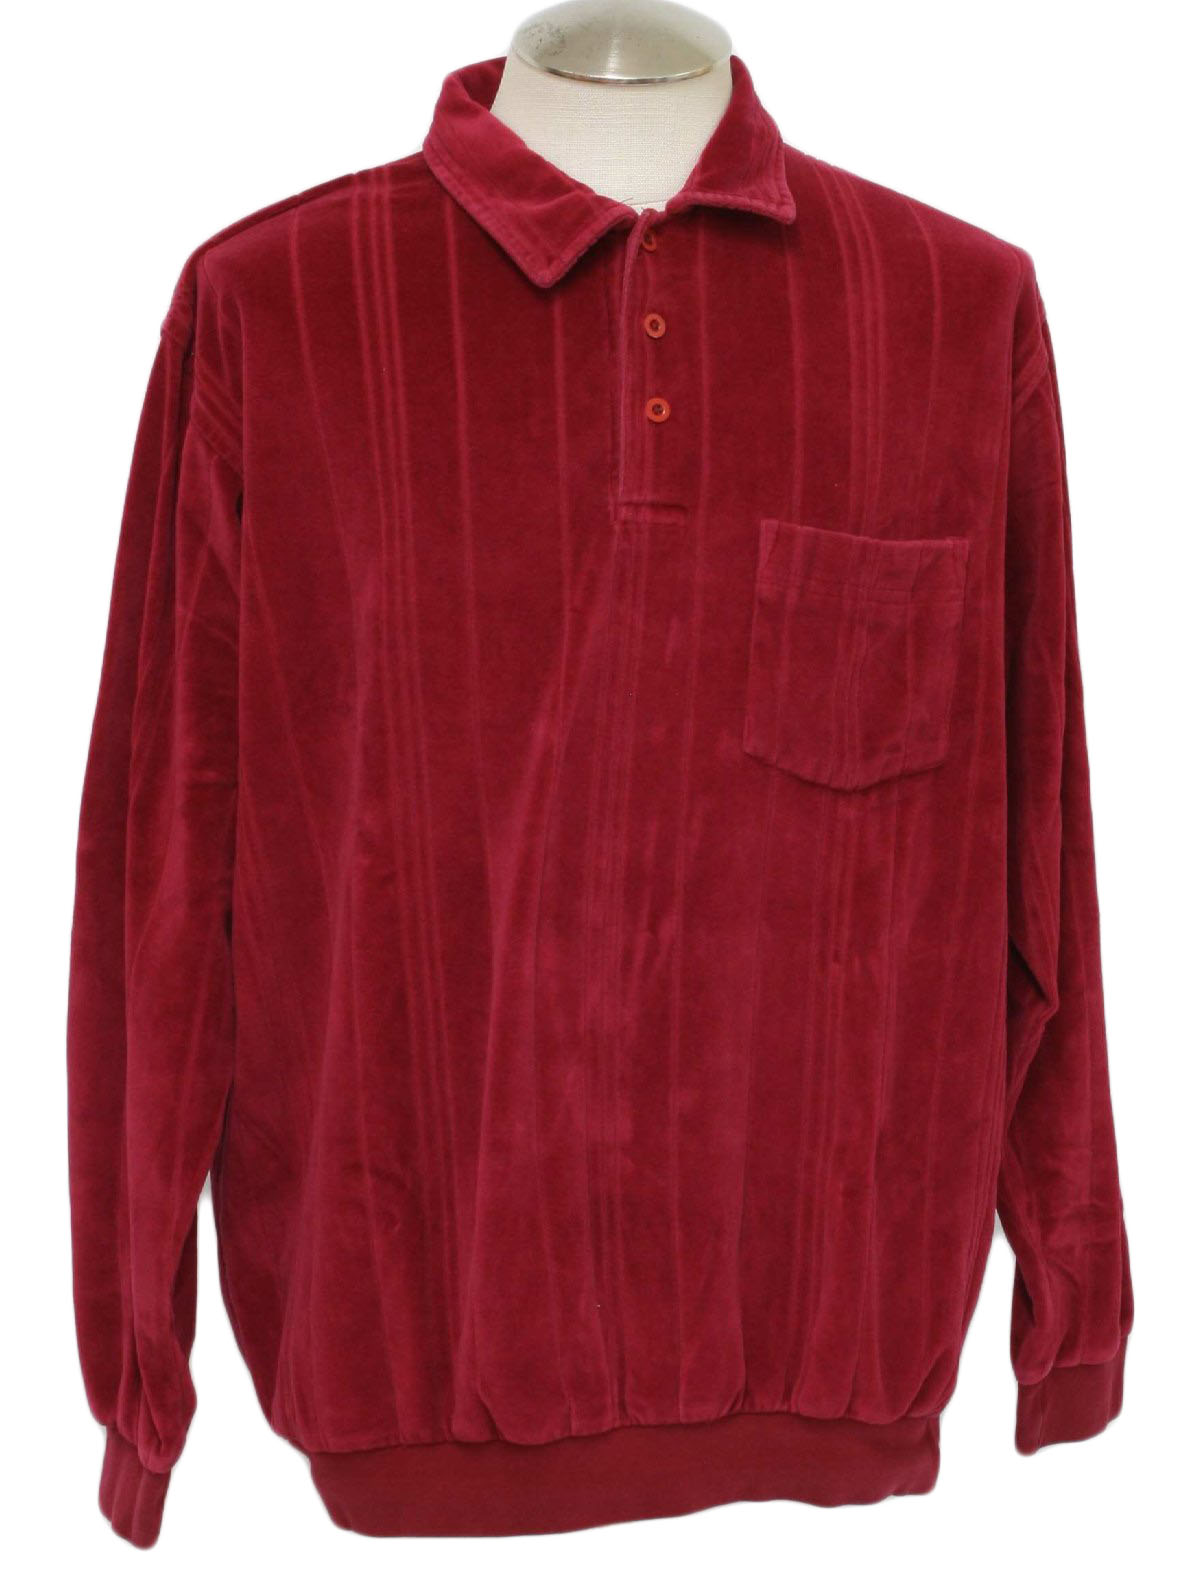 Retro 80s Velour Shirt (John Blair) : 80s -John Blair- Mens maroon ...